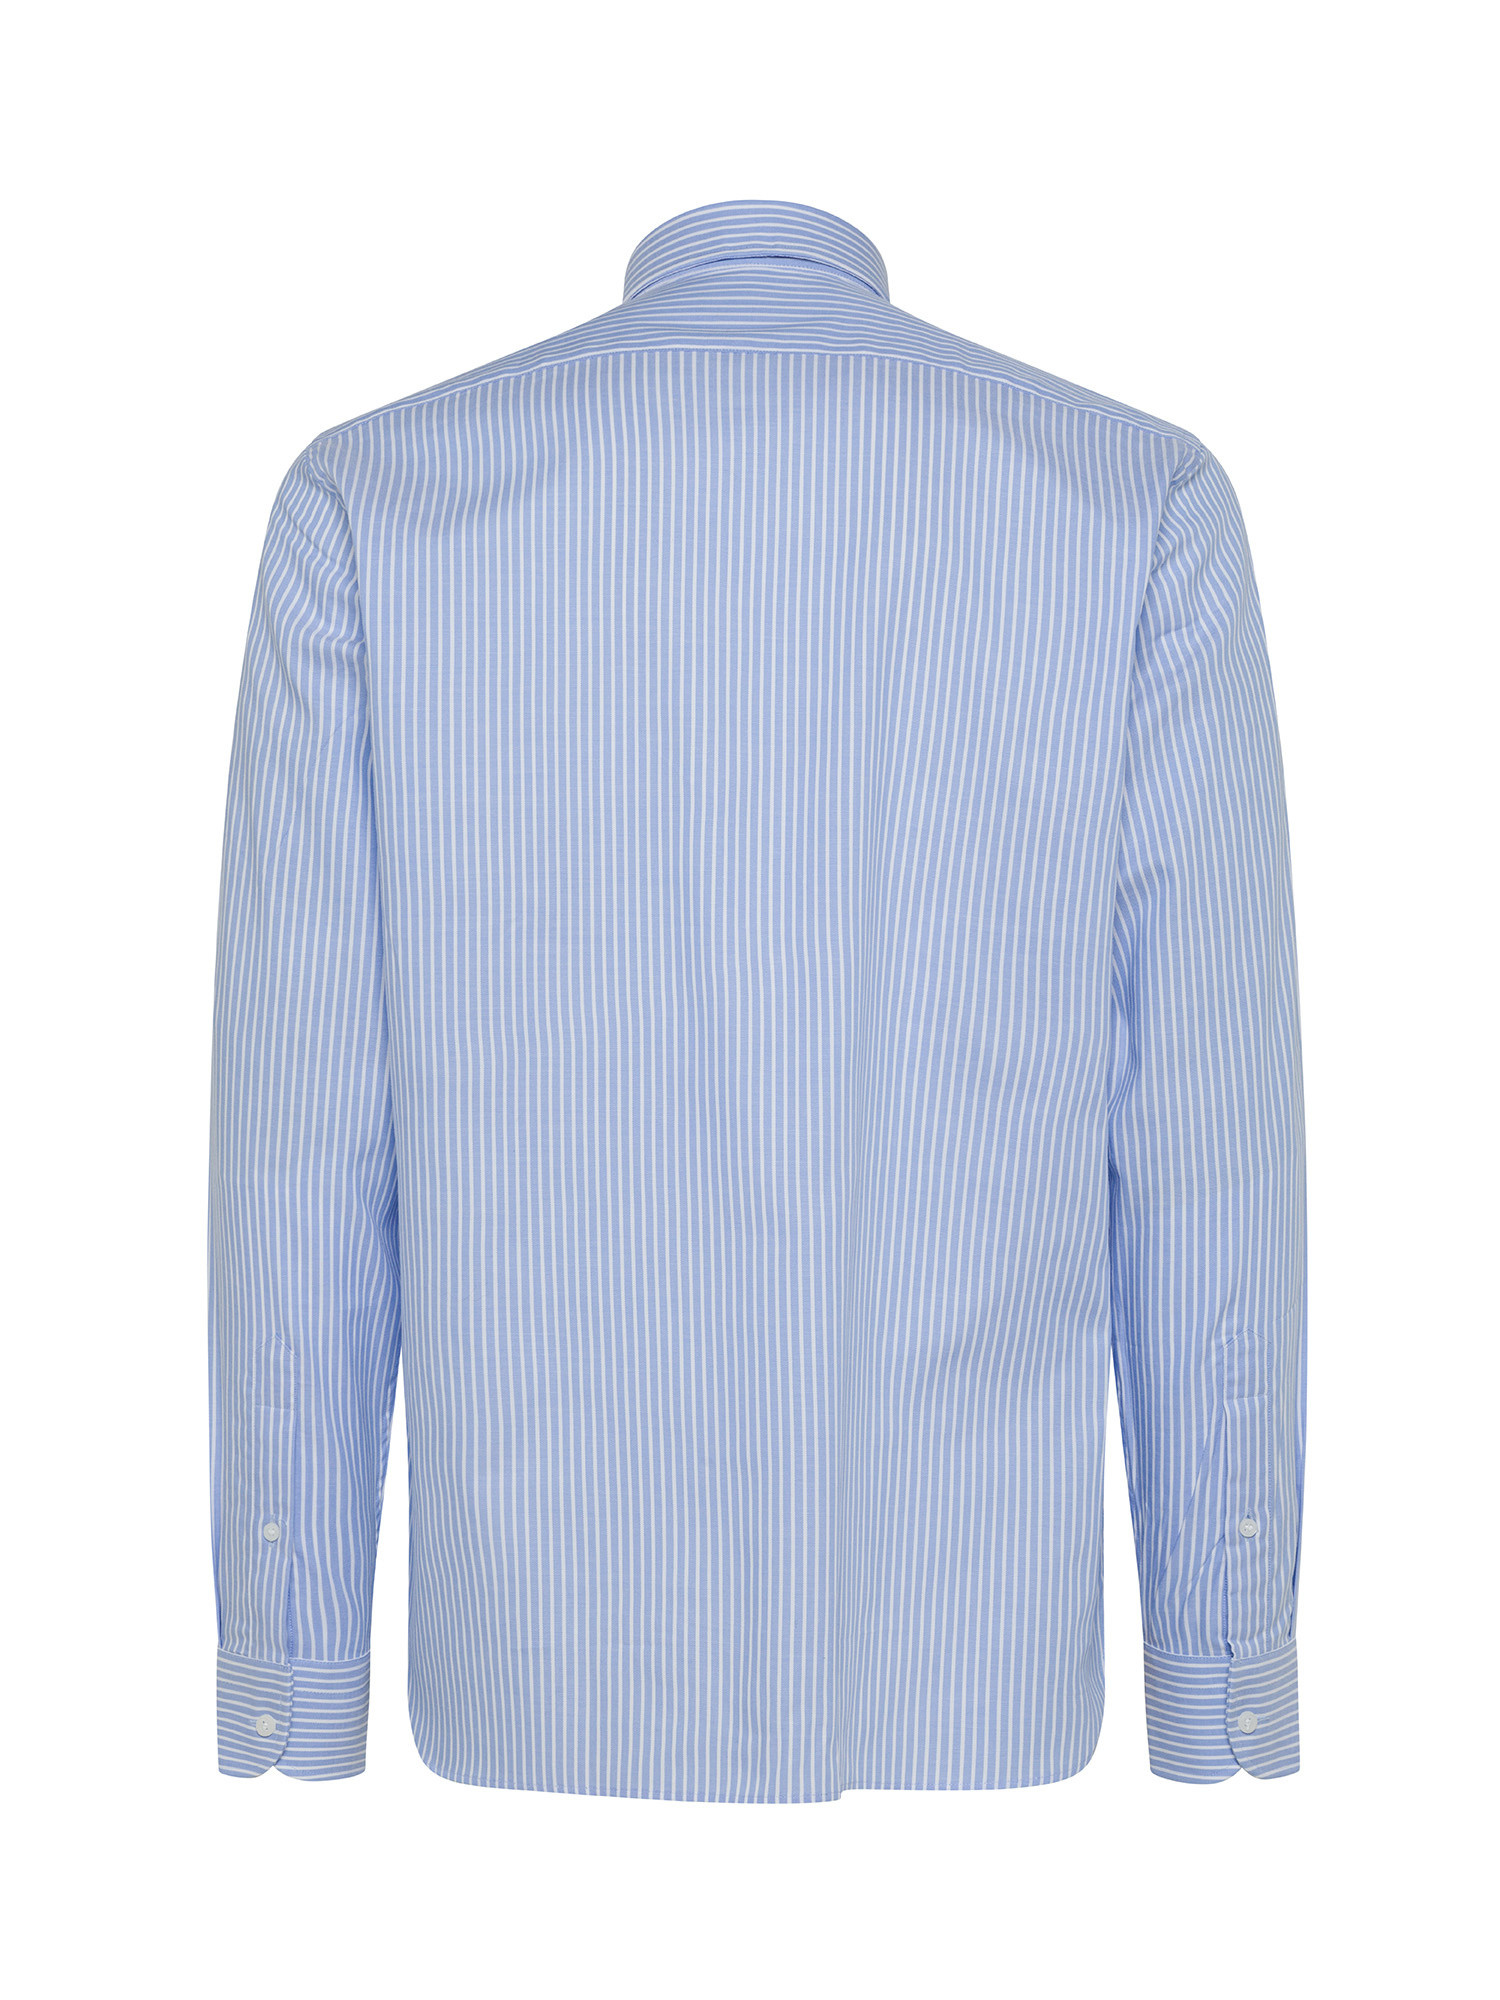 Luca D'Altieri - Camicia tailor fit in puro cotone, Azzurro, large image number 1